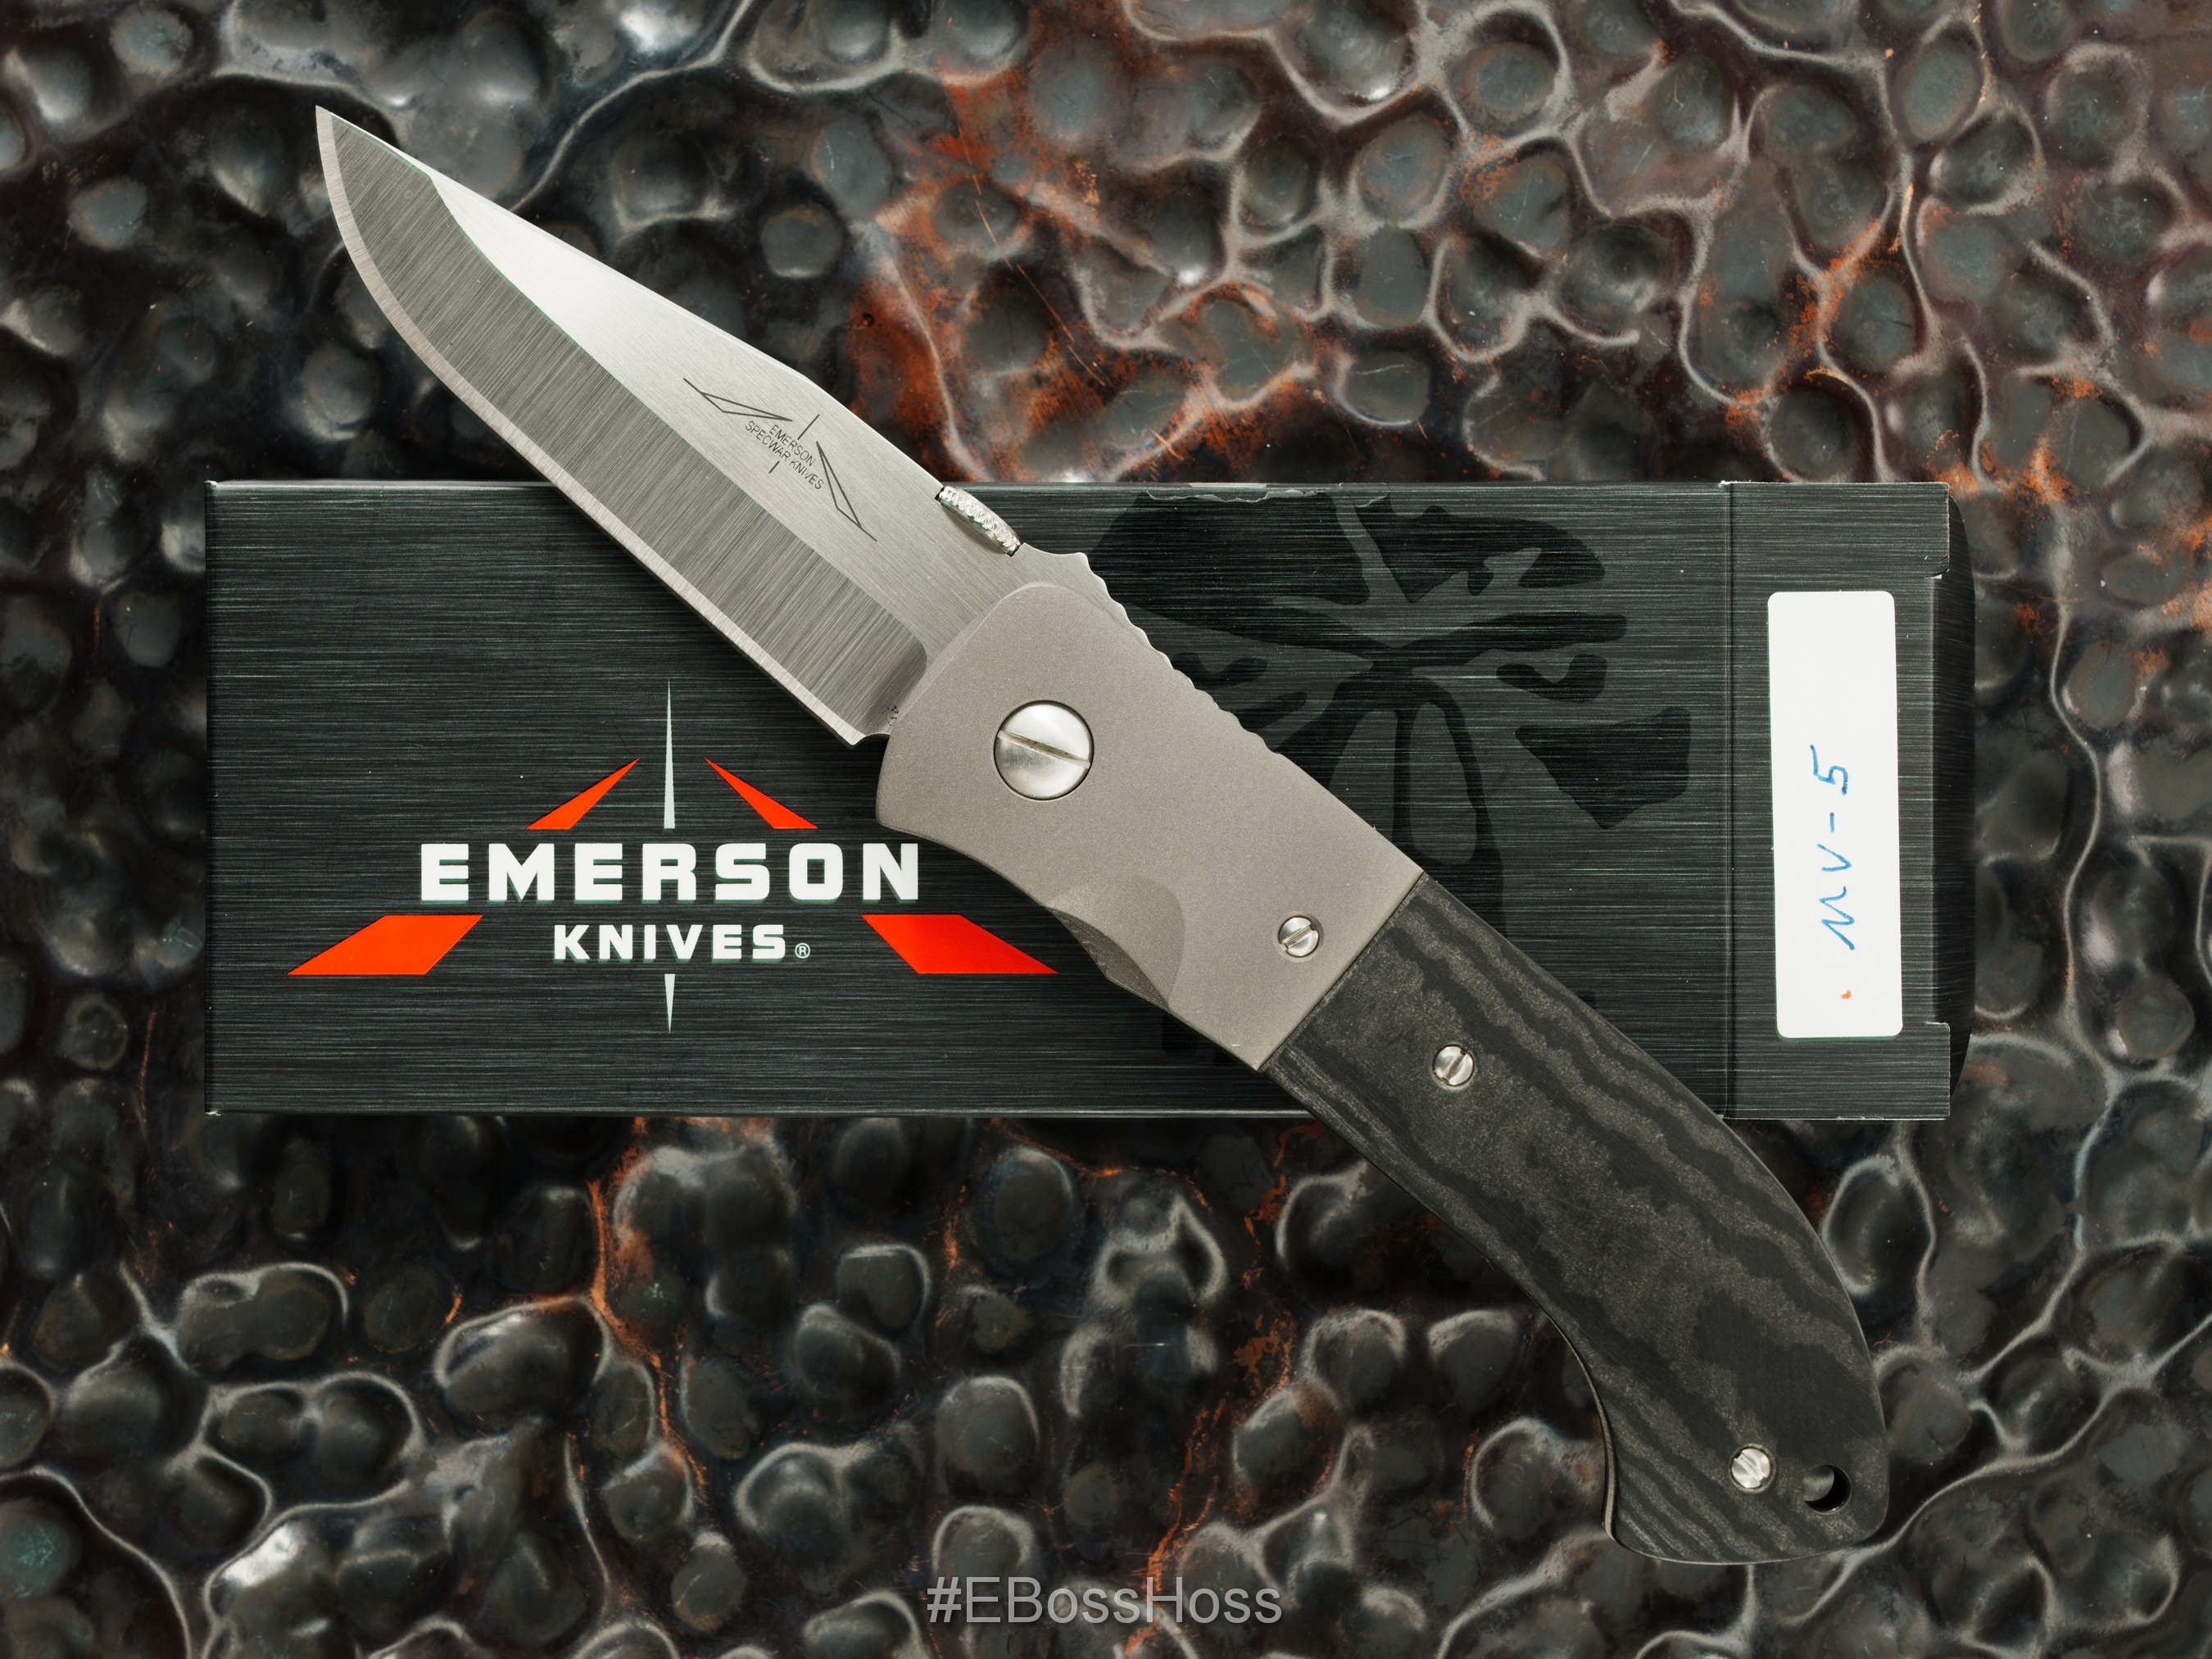 Ernie Emerson Custom MV-5 (aka Viper 5)